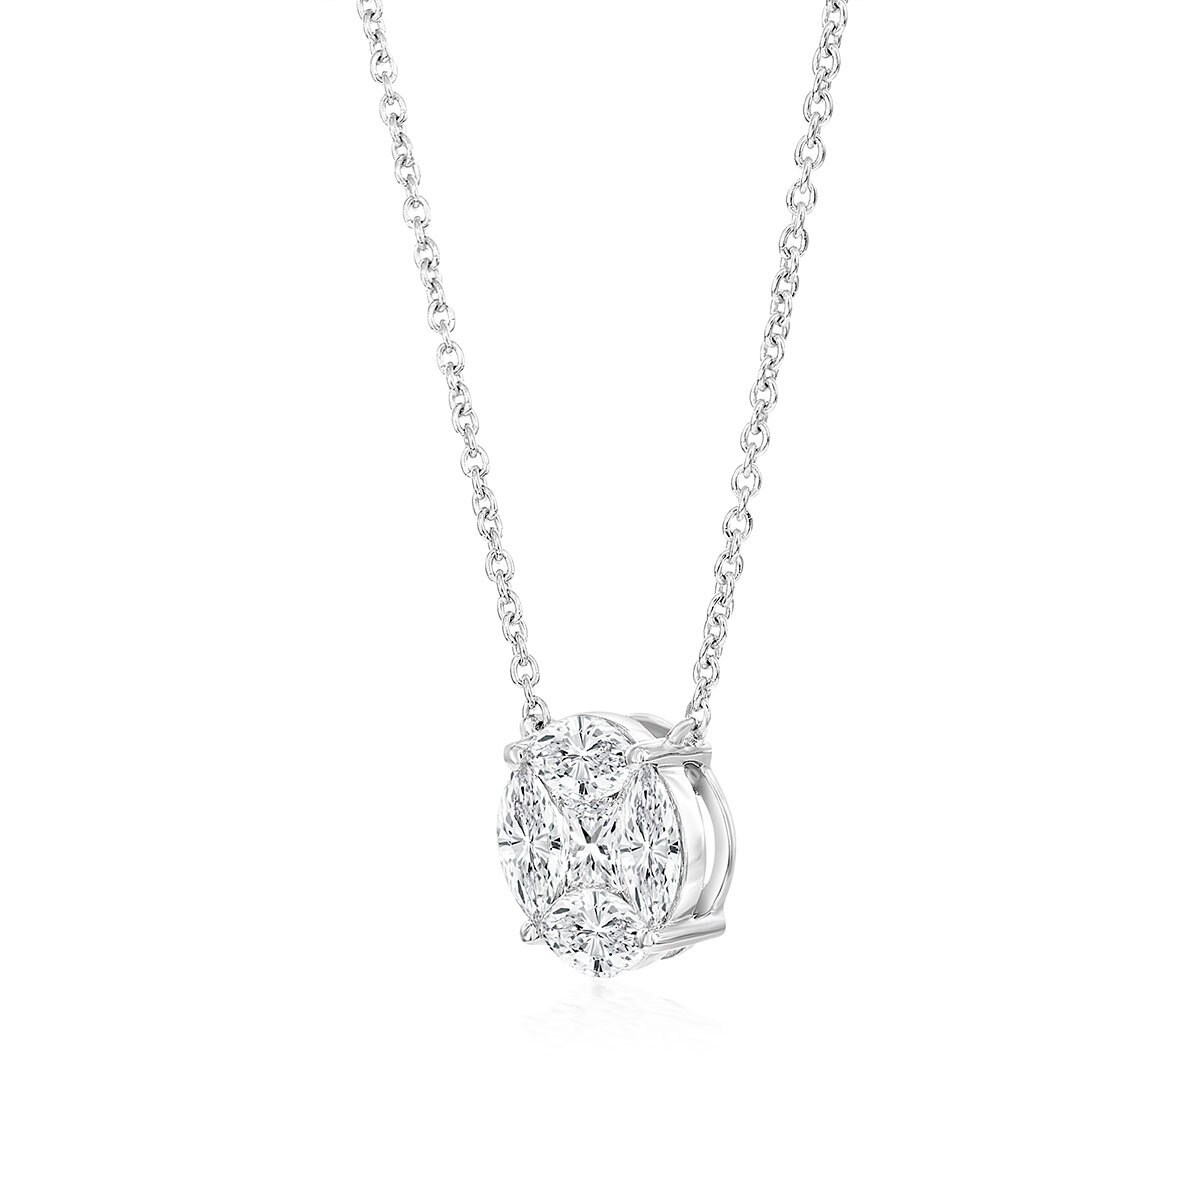 1.00ctw Marquise & Princess Cut Diamond Pendant, 18ct White Gold